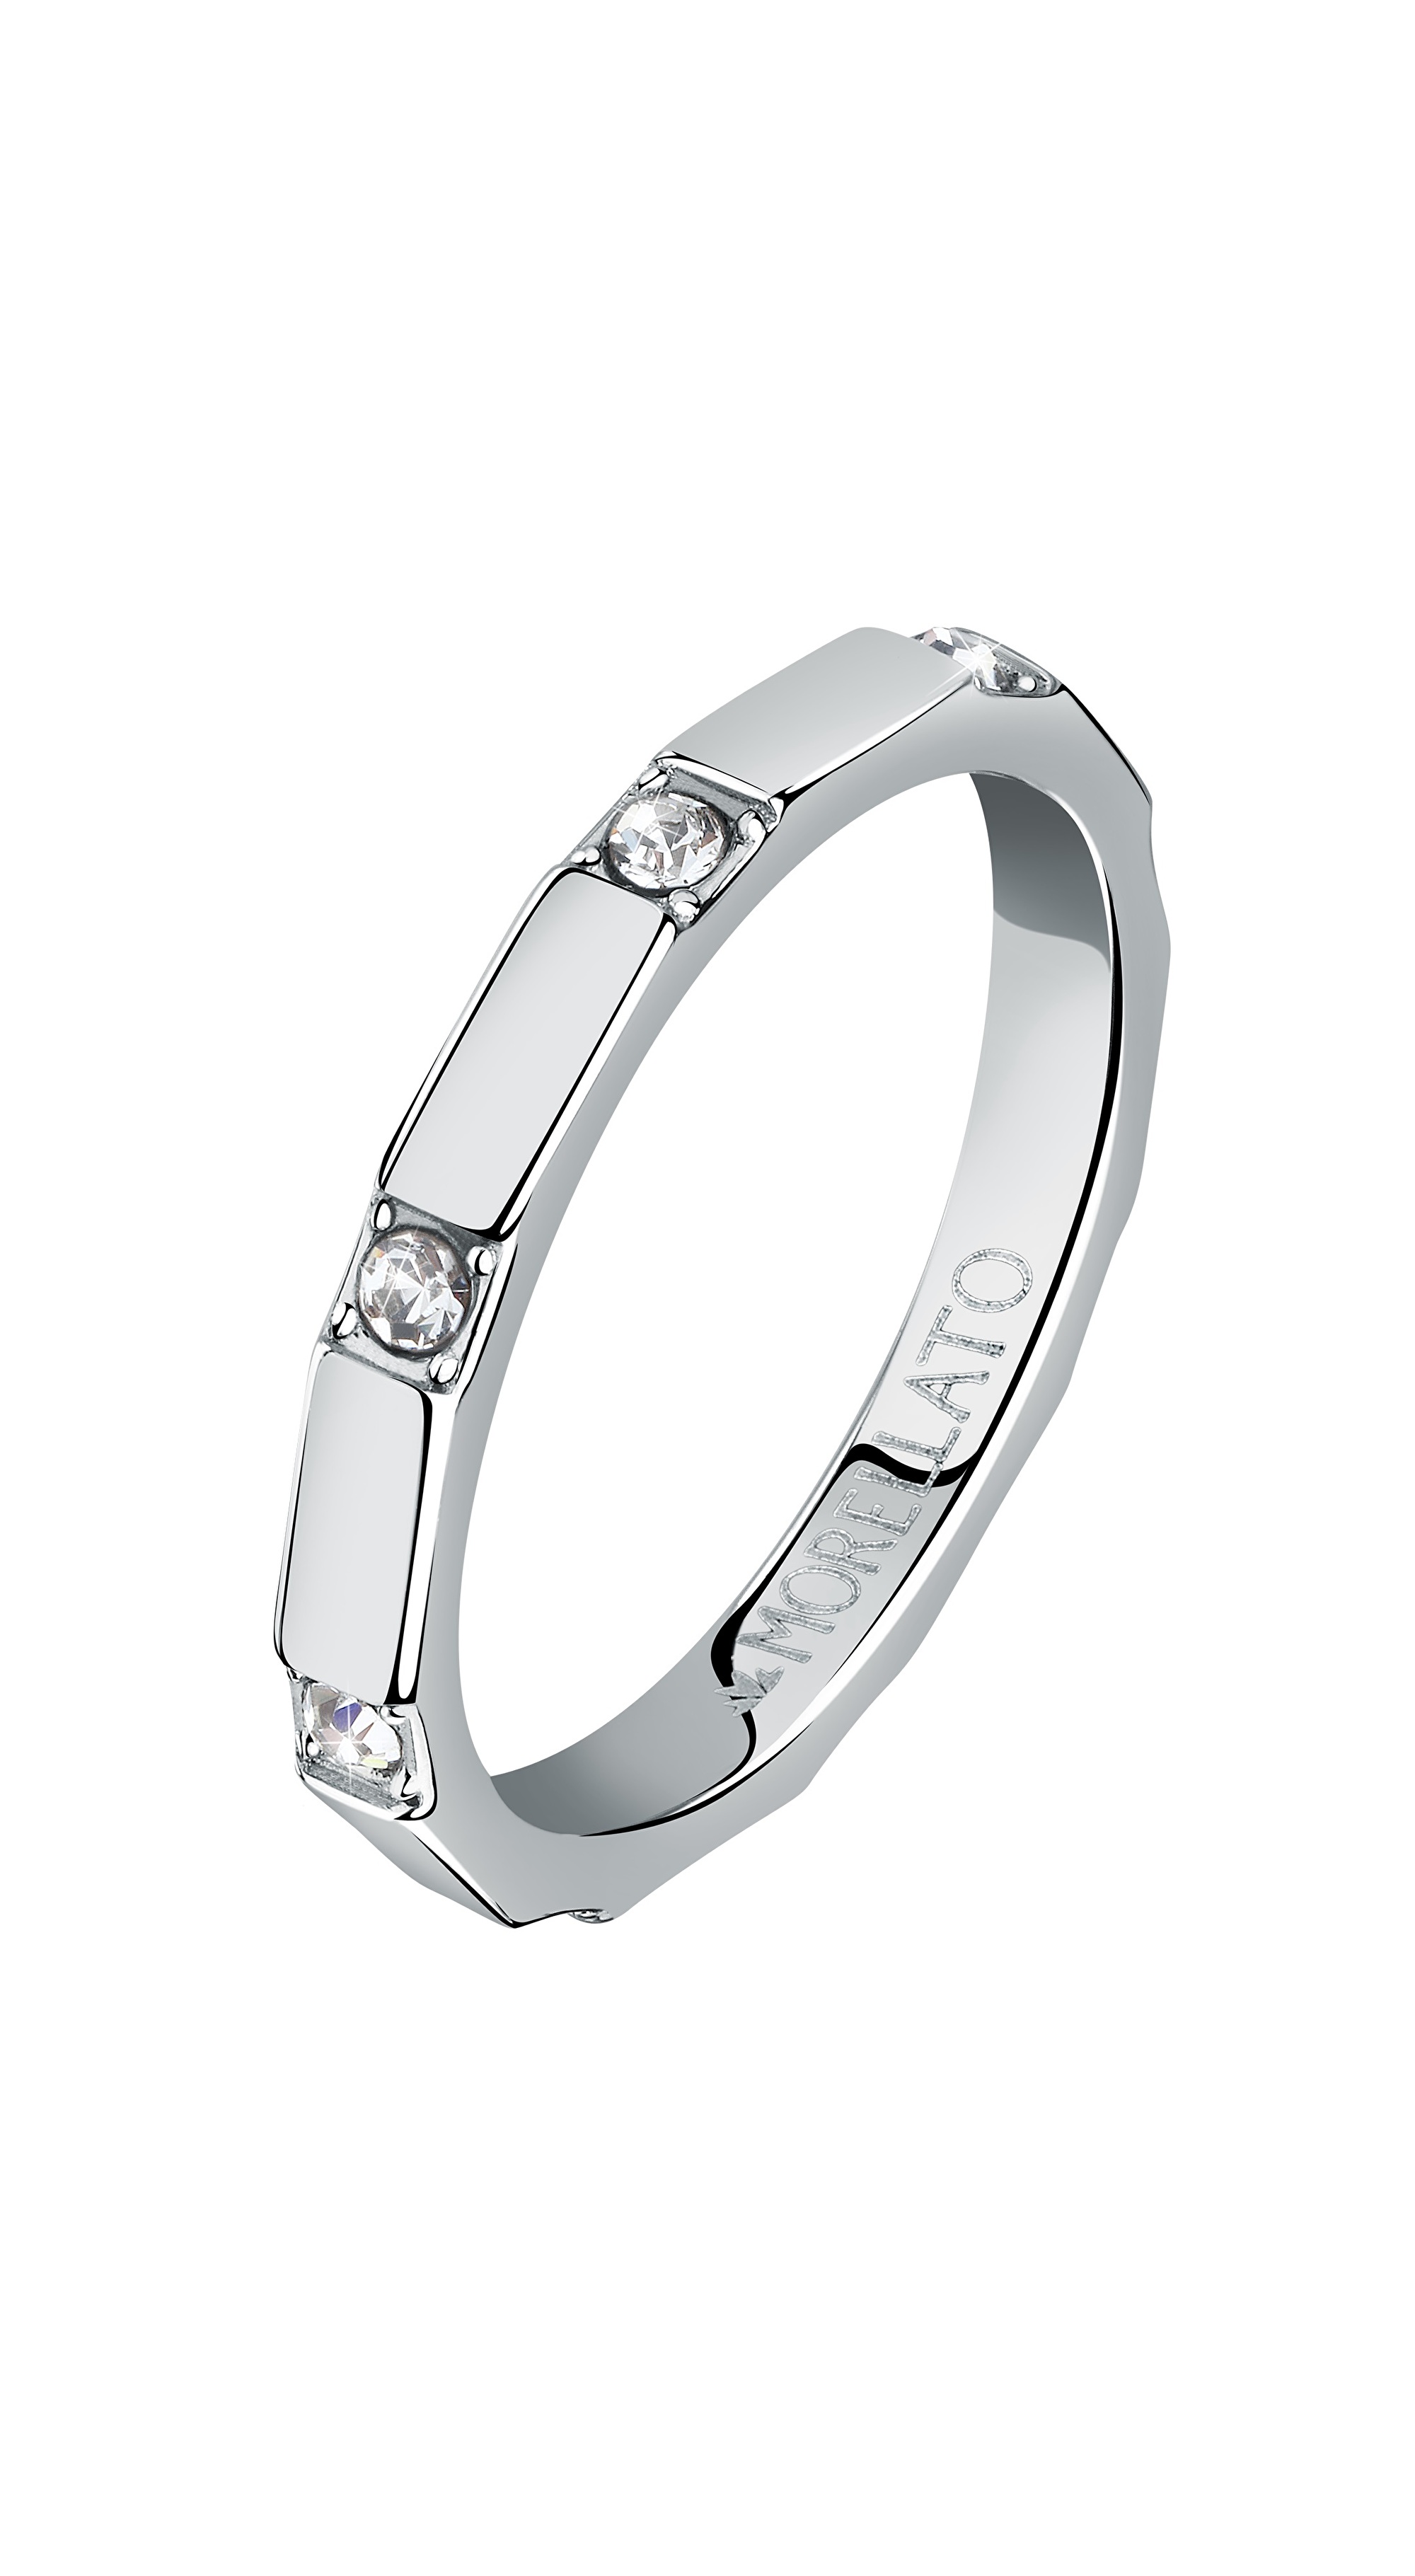 Morellato Stylový ocelový prsten s krystaly Motown SALS85 63 mm